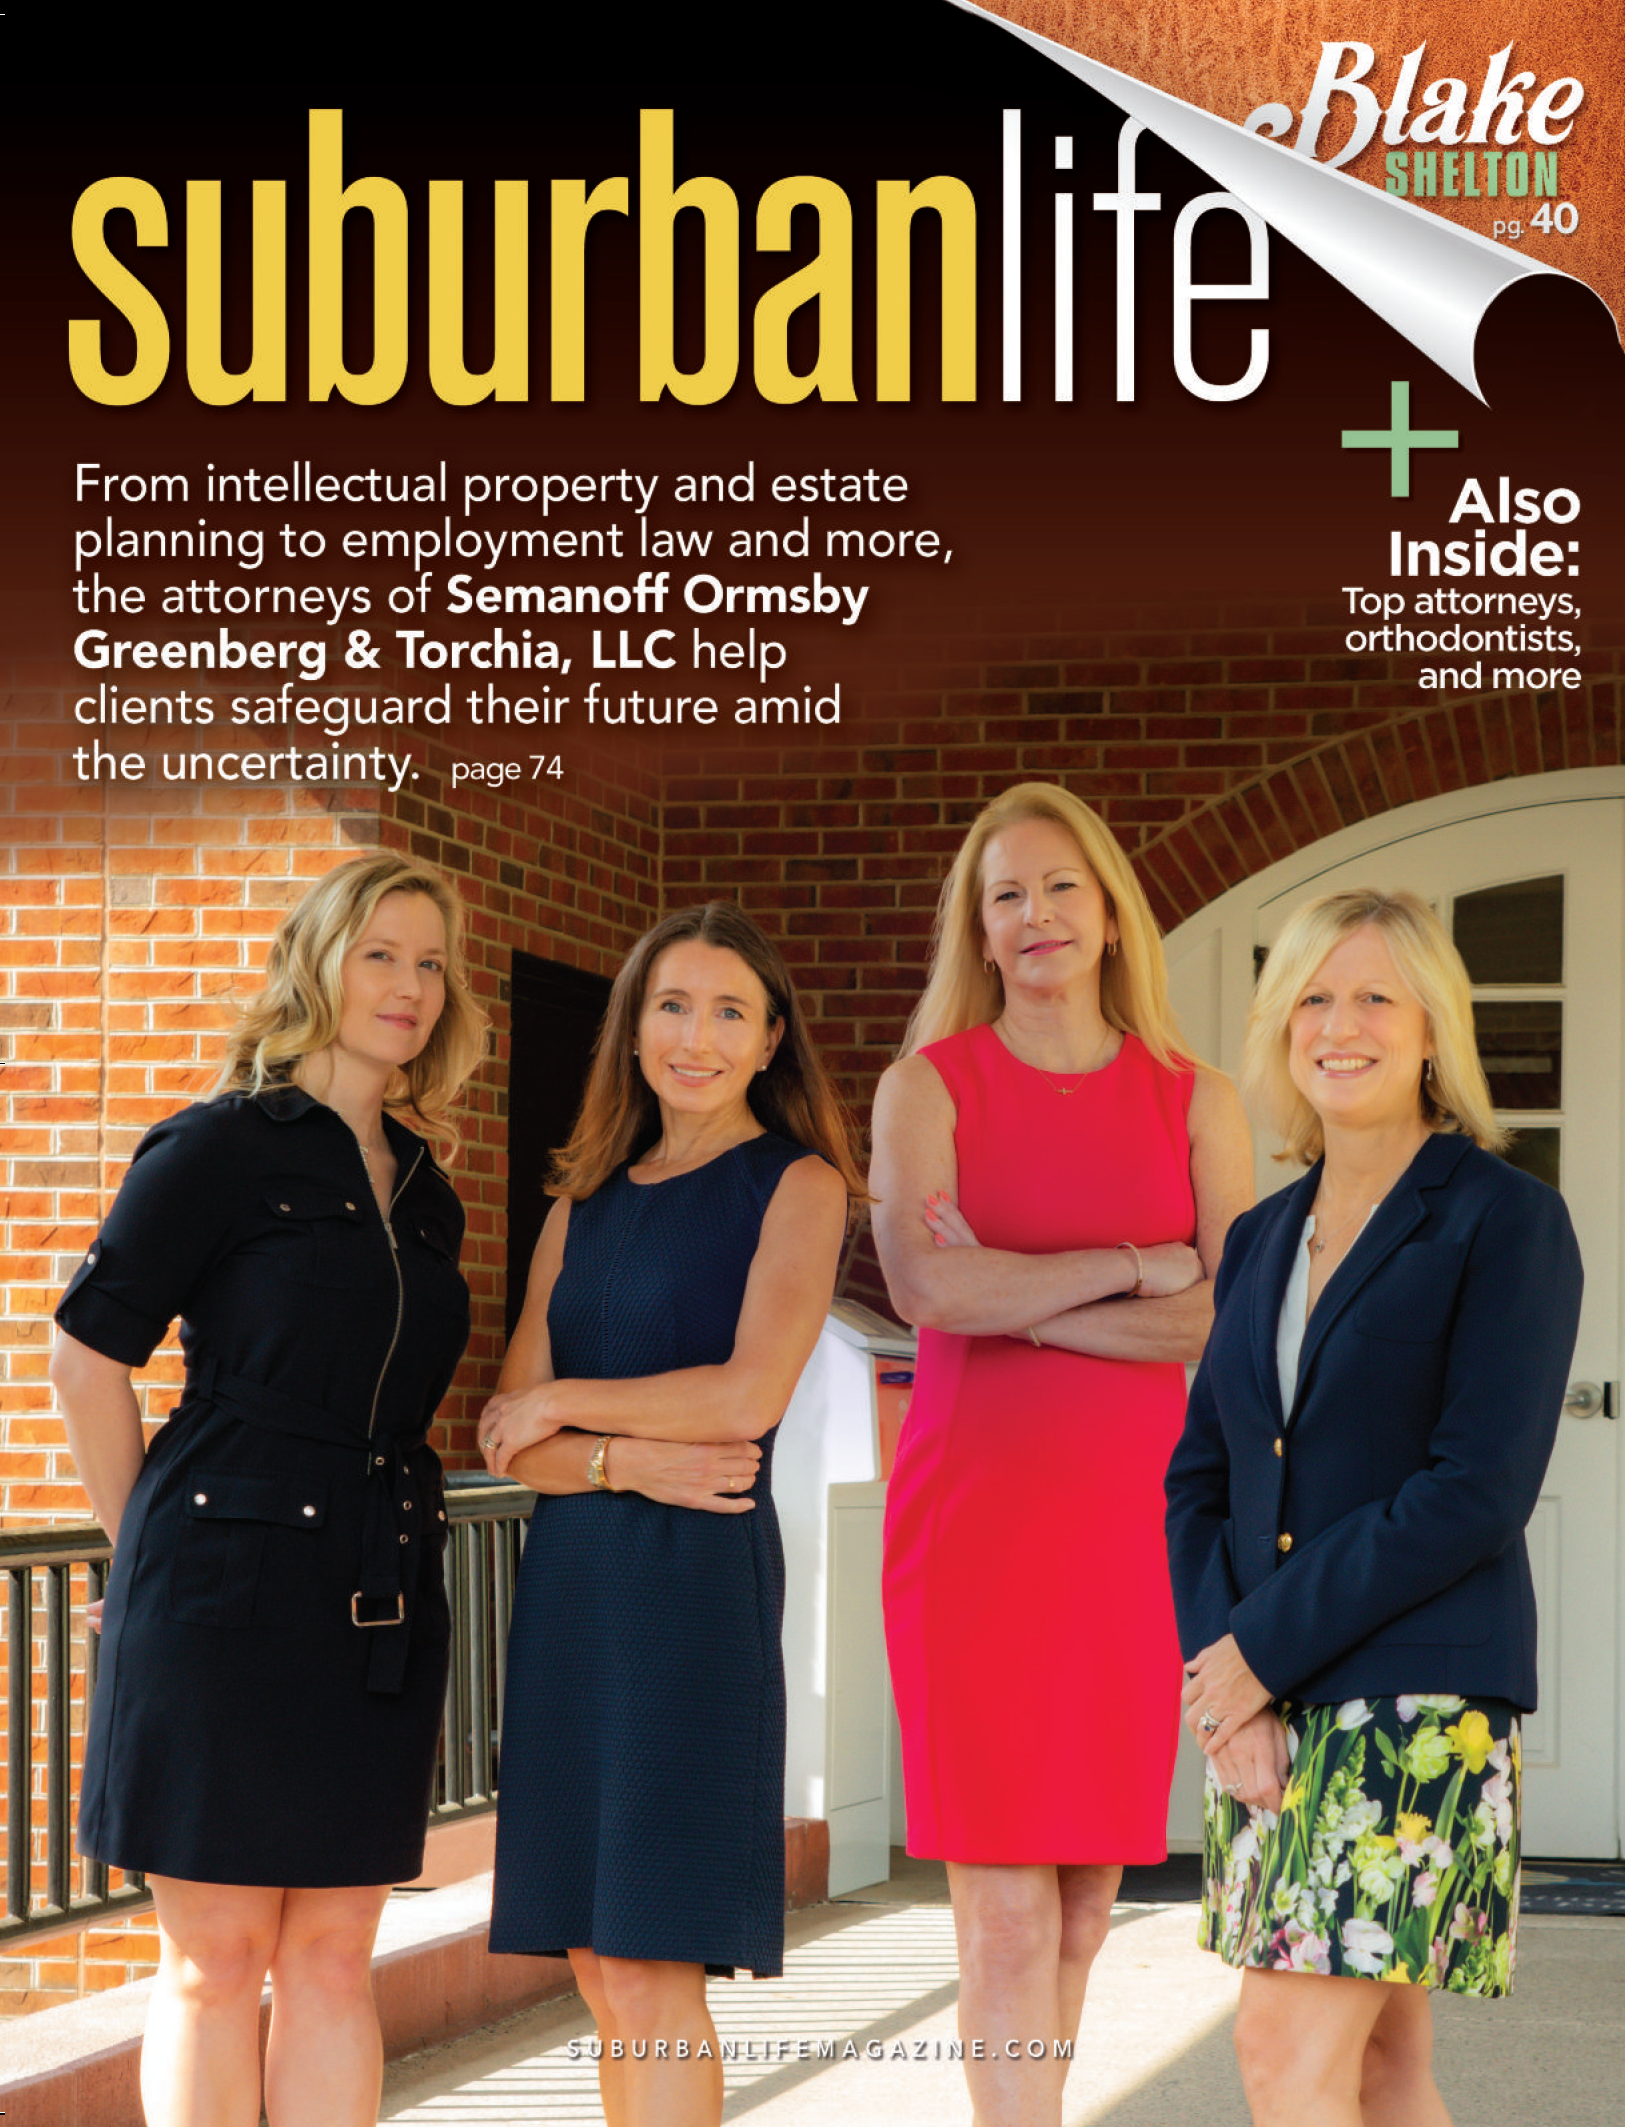 Suburban Life Cover Image